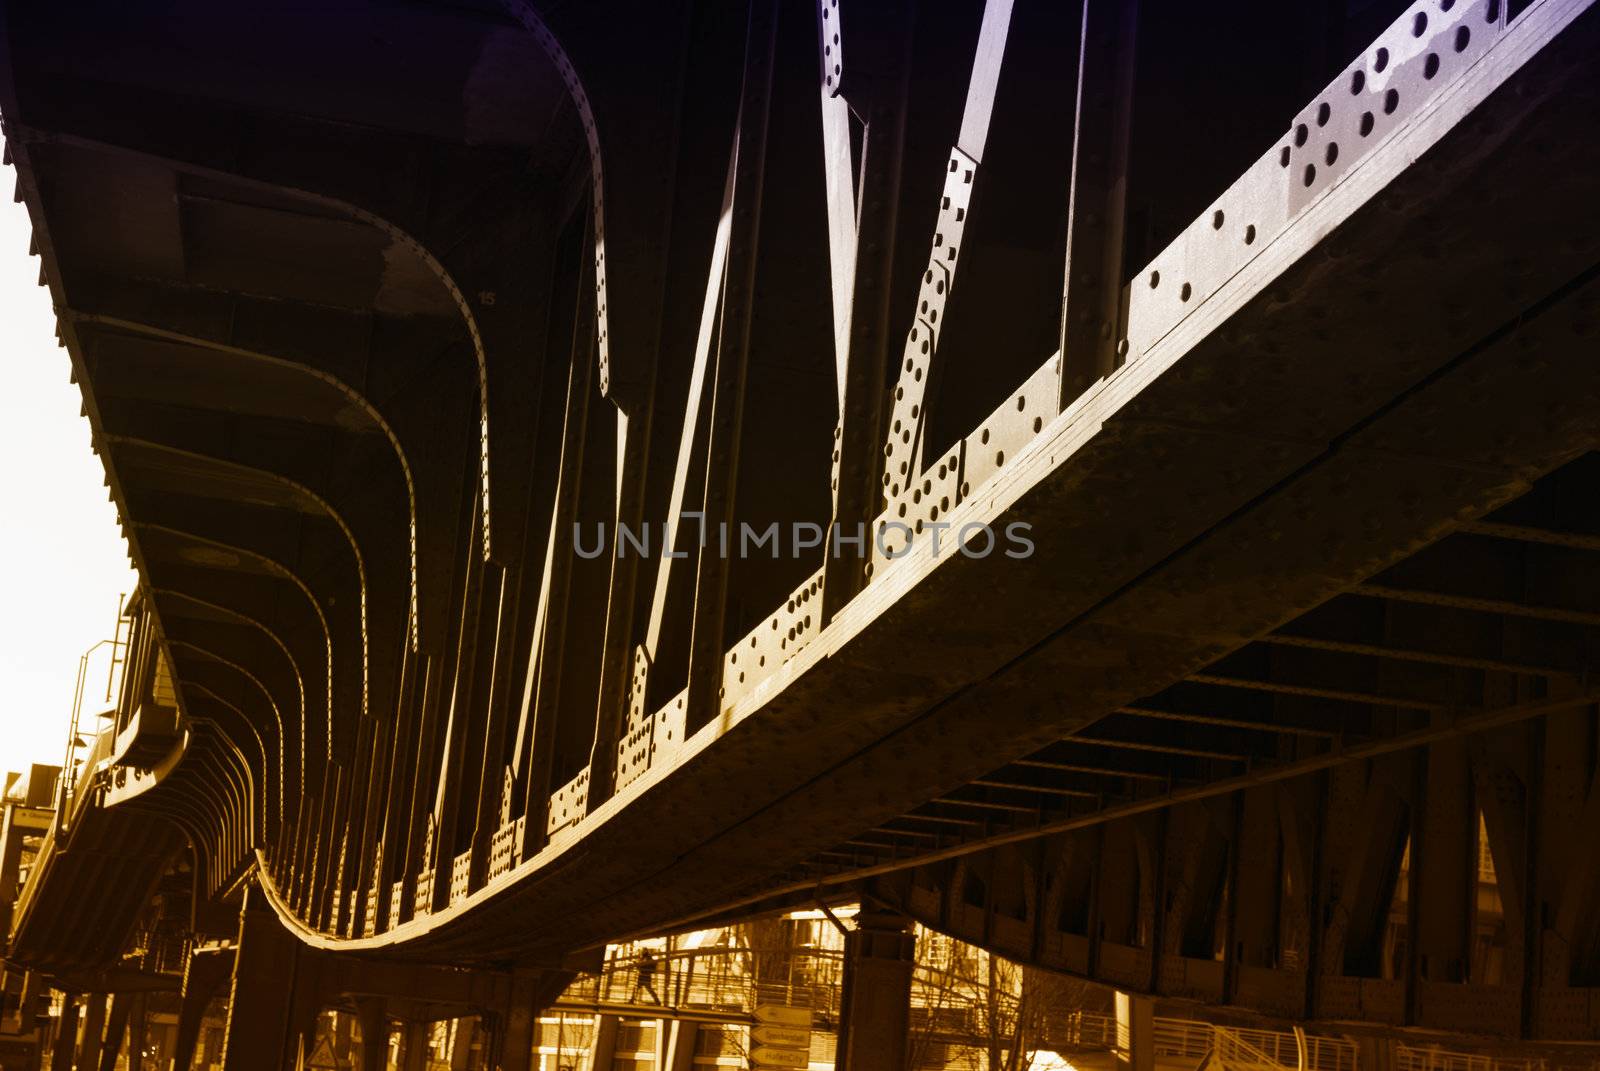 Hamburg and its Bridges by Fr@nk